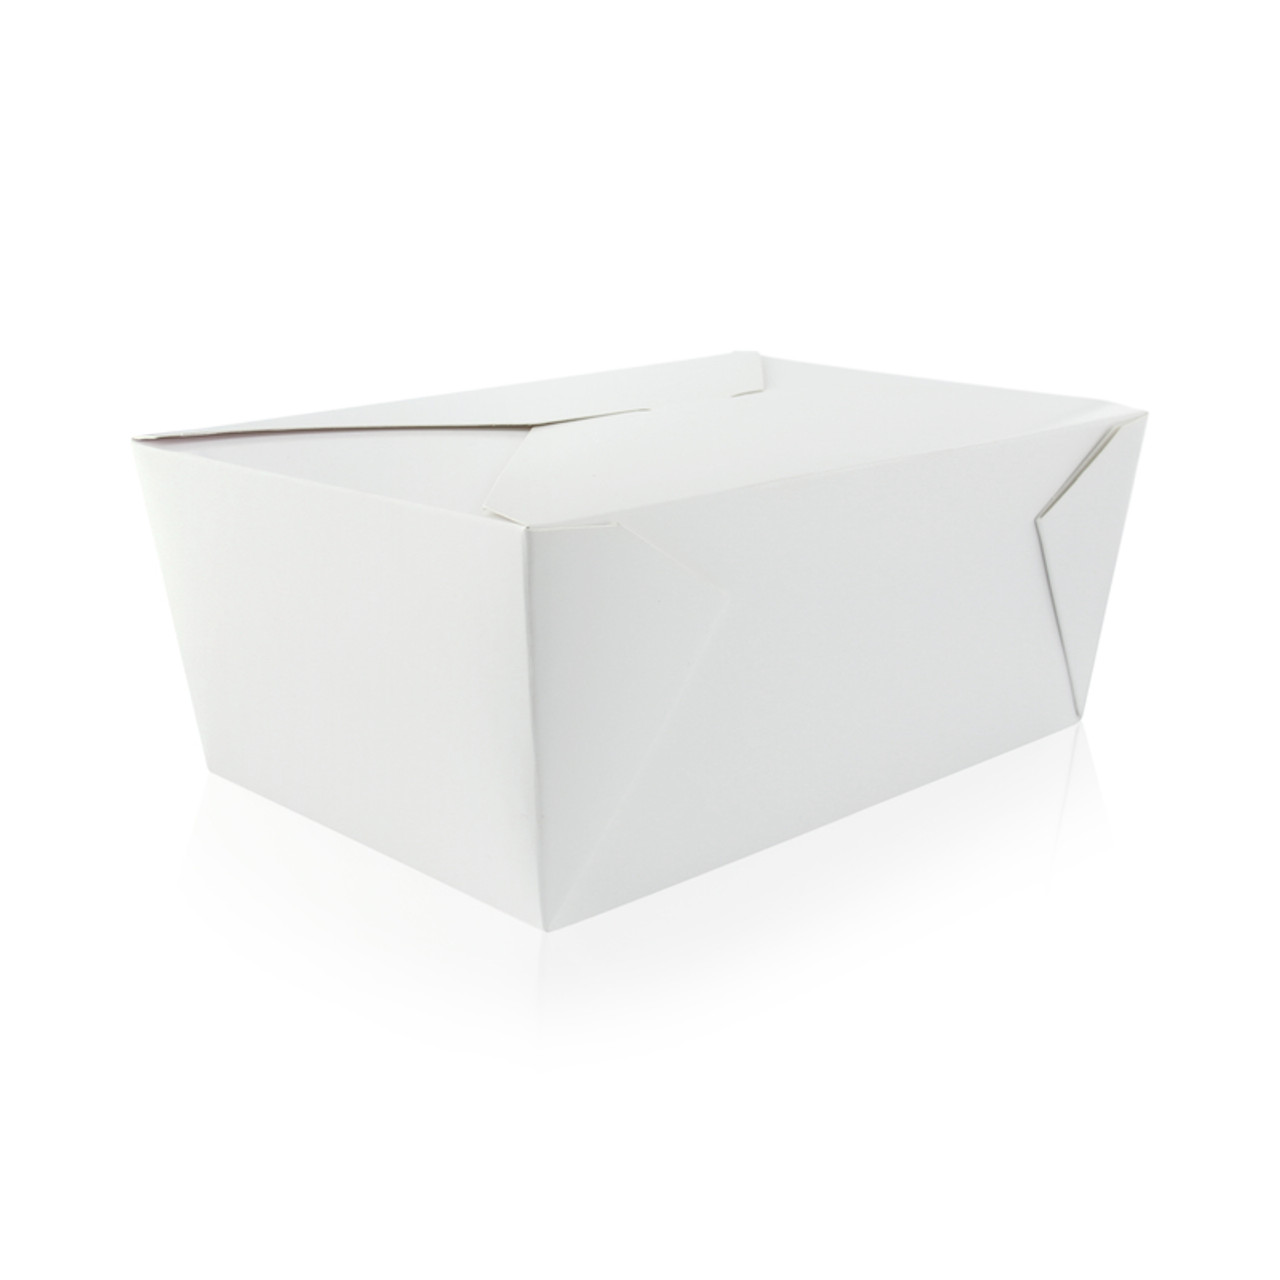 White Meal Box 100oz Base:7.7 x 5.5 x 3.5in Top:8.5 x 6.3 x 3.5in - 40 pcs